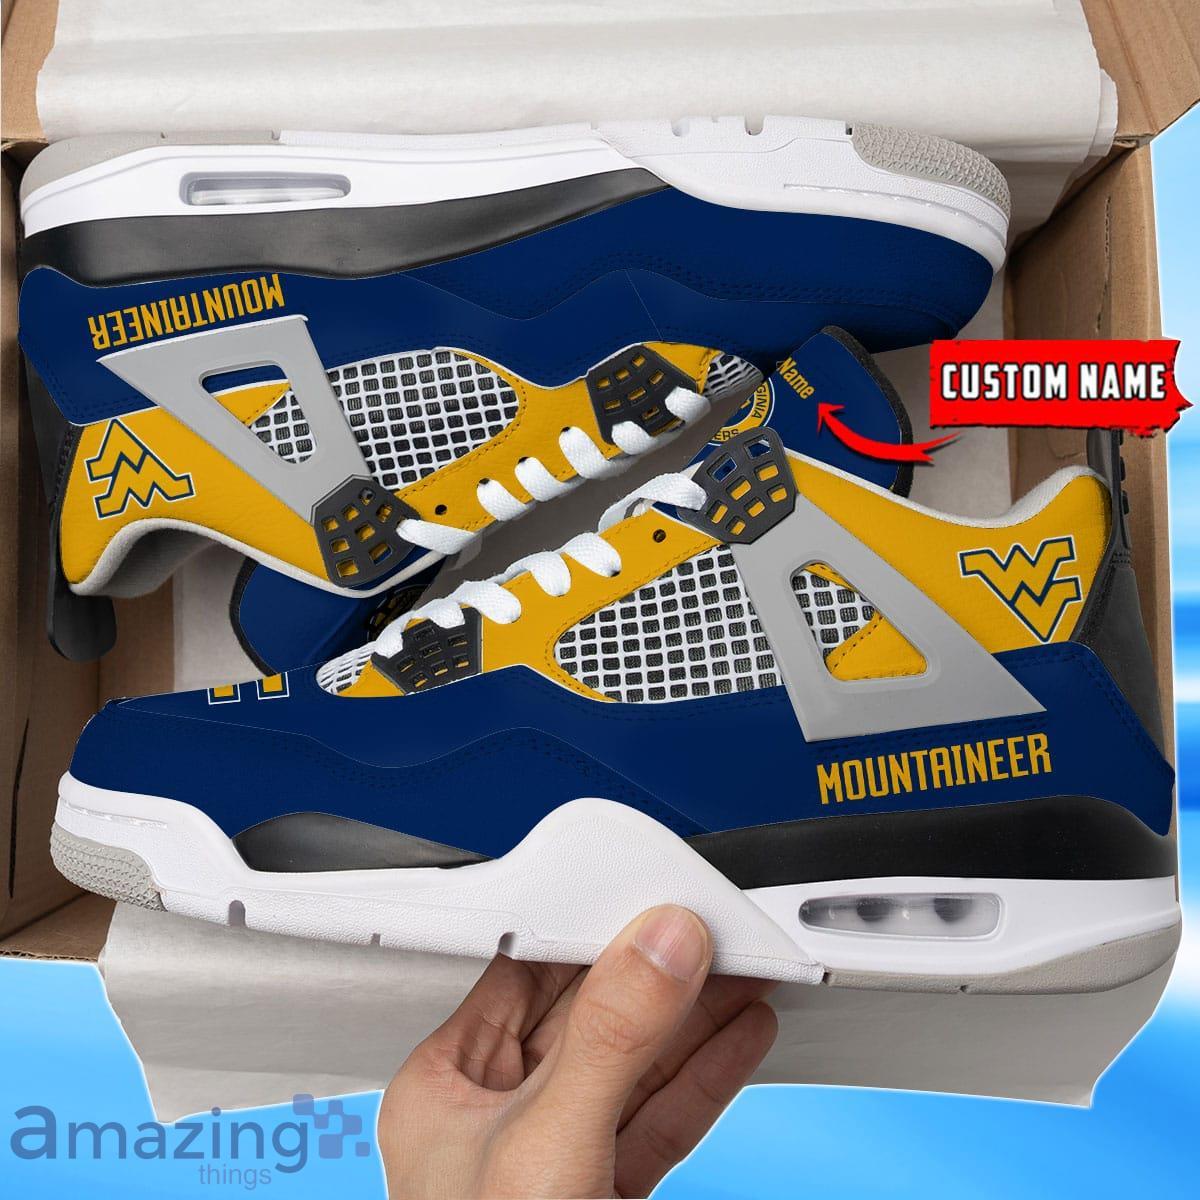 West Virginia Mountaineers Custom Name Air Jordan 4 Shoes Impressive Gift For Men Women Product Photo 1